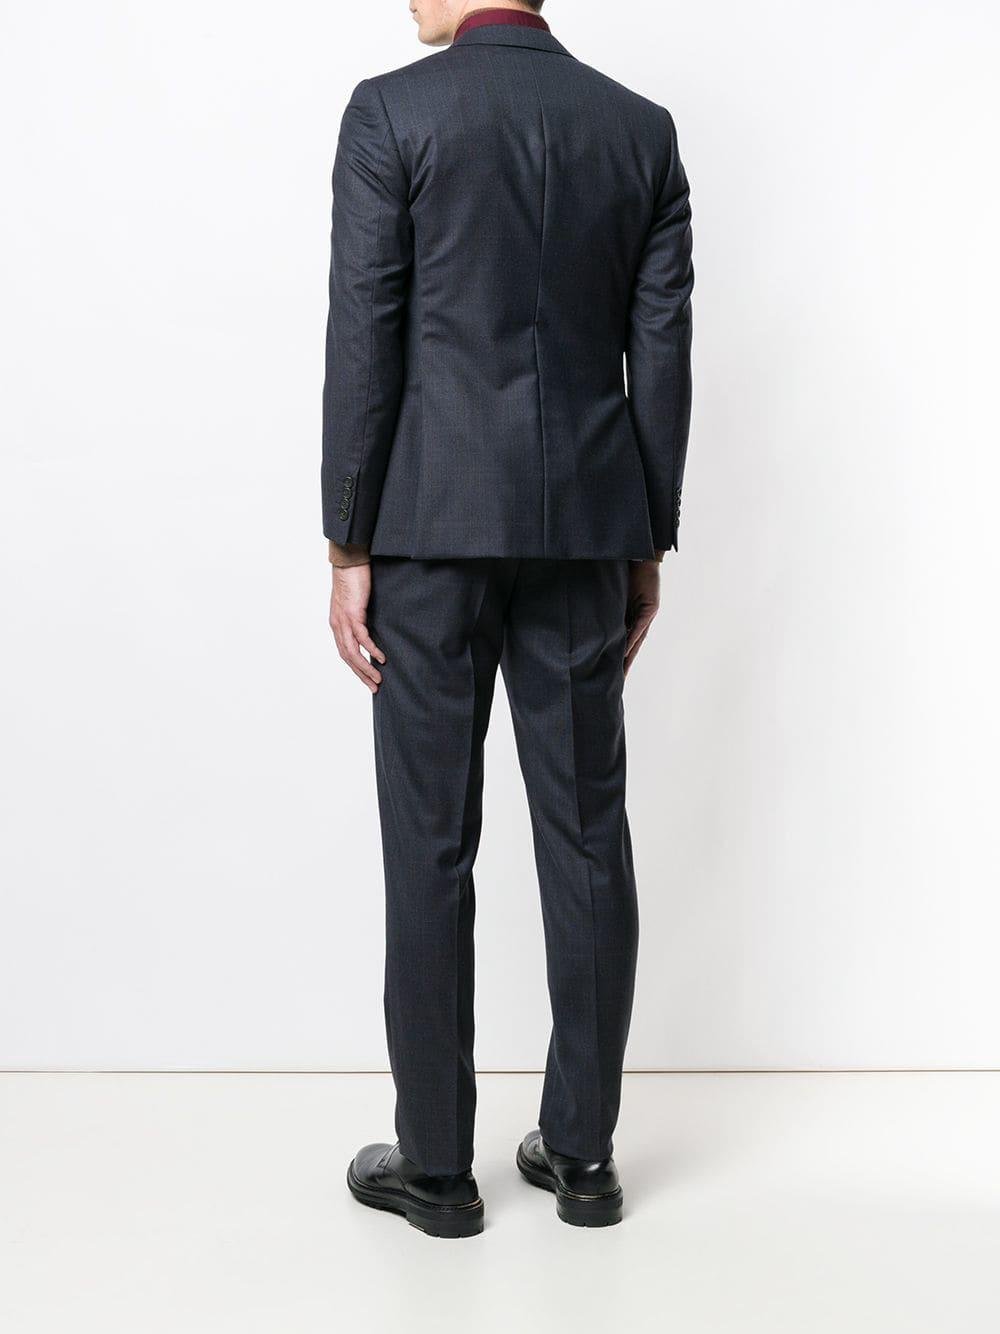 Lanvin Wool Two-piece Suit in Blue for Men - Lyst